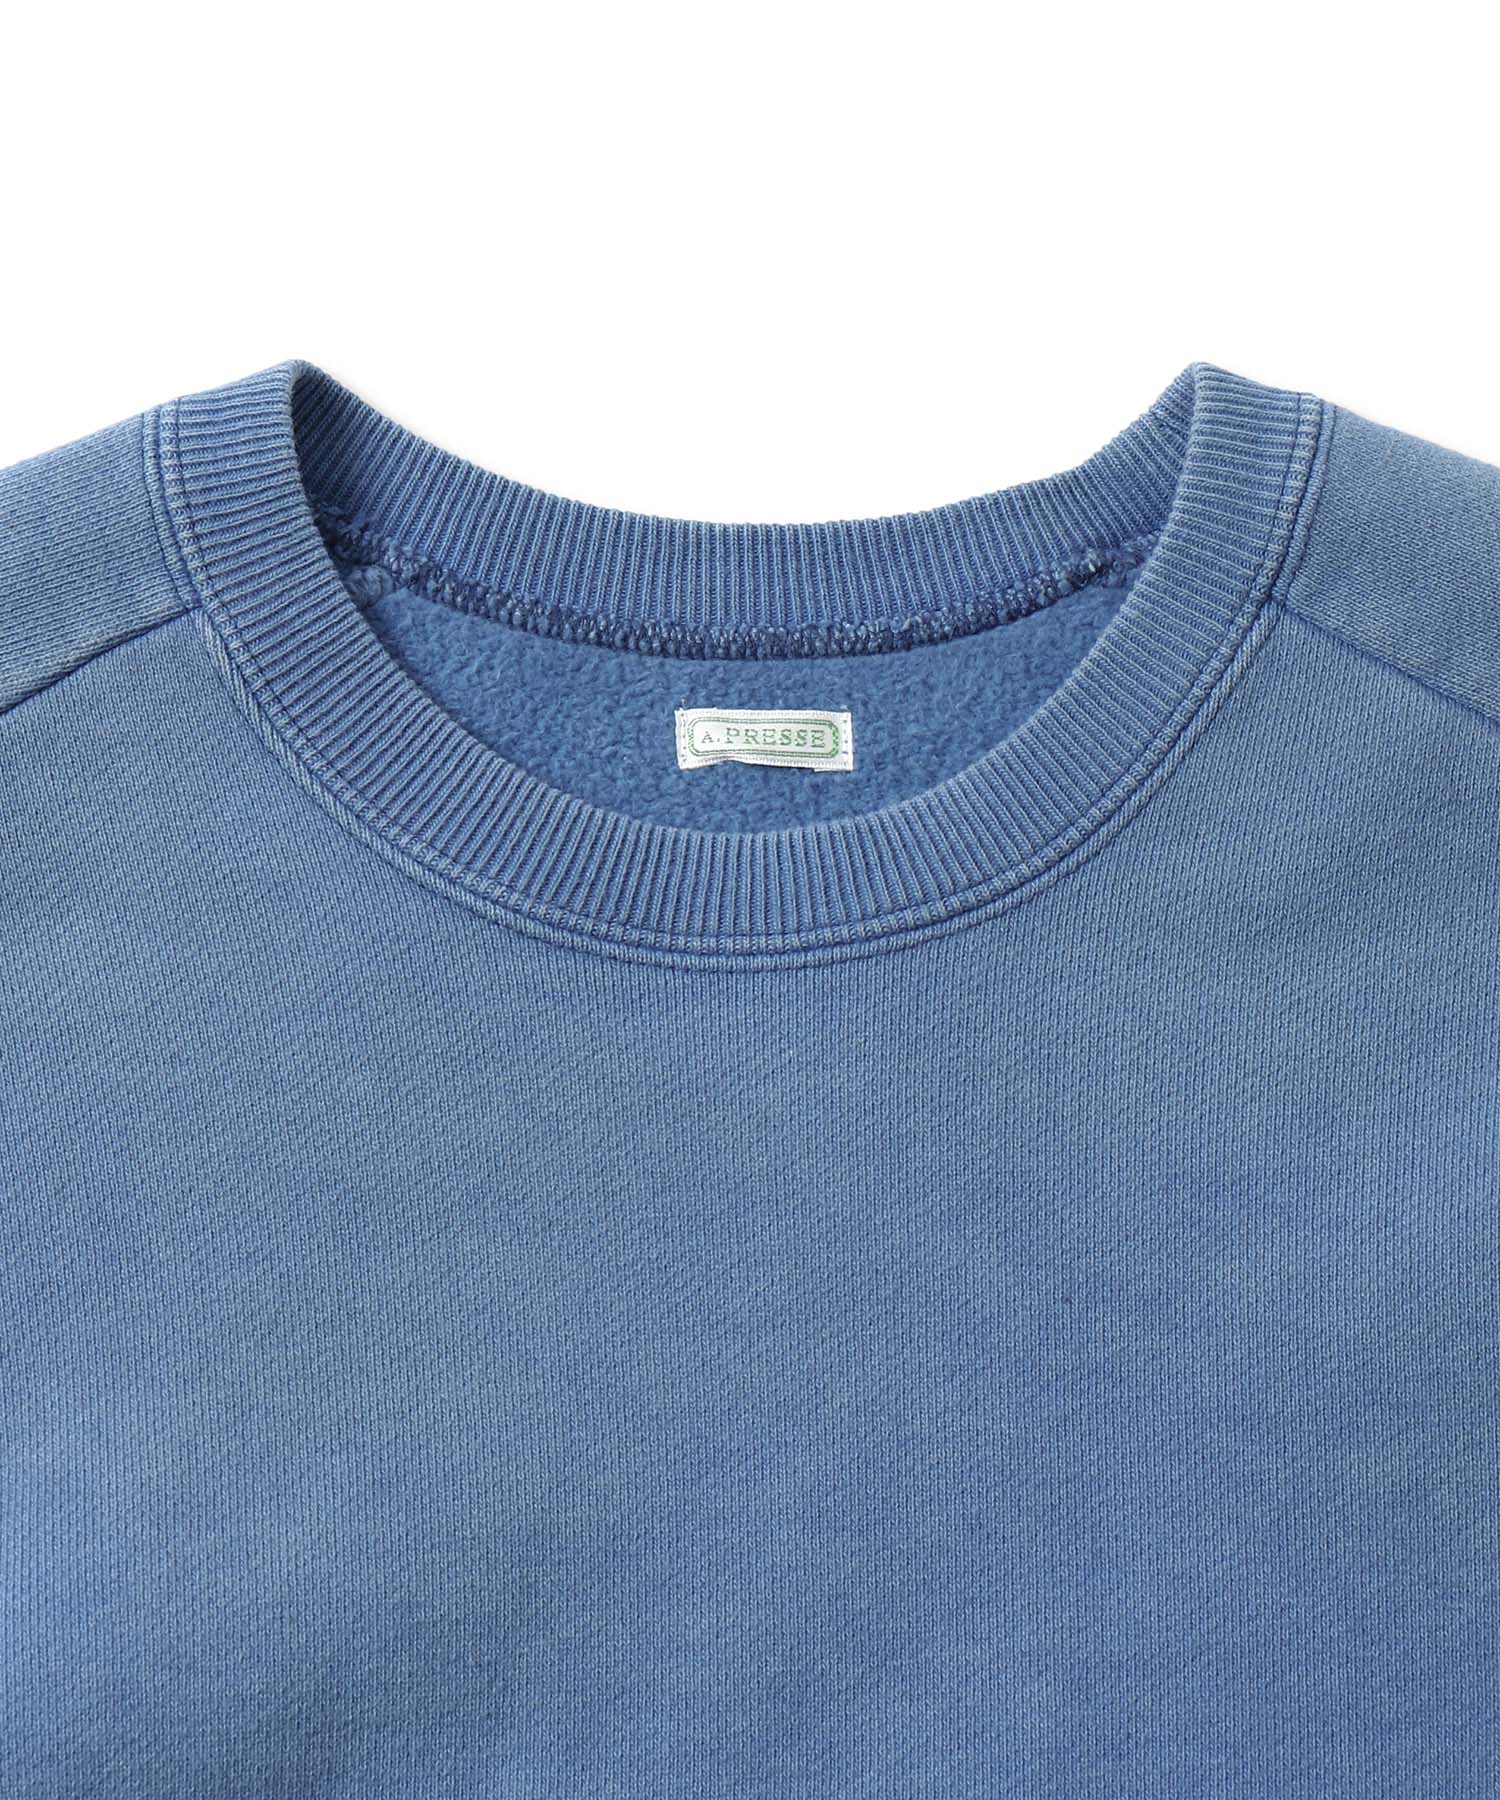 Vintage Sweatshirt - A.PRESSE (アプレッセ) - tops (トップス 